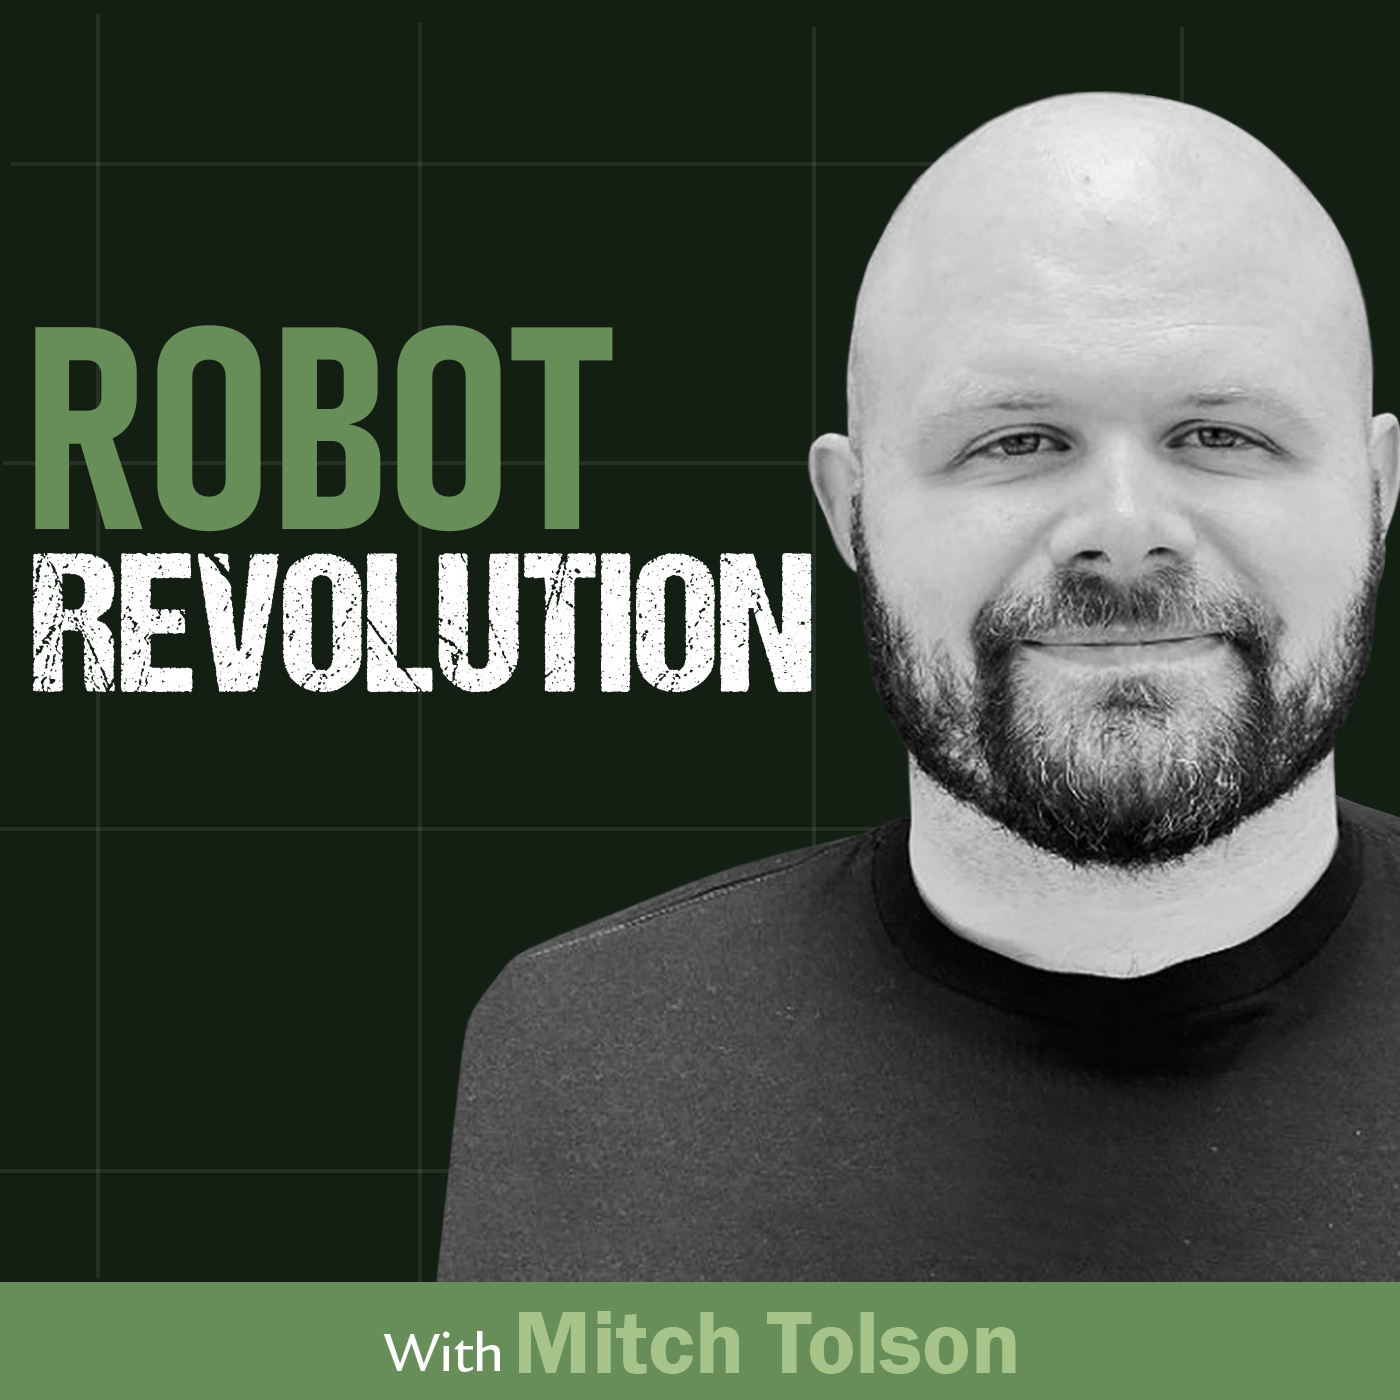 Robotic revolution 1